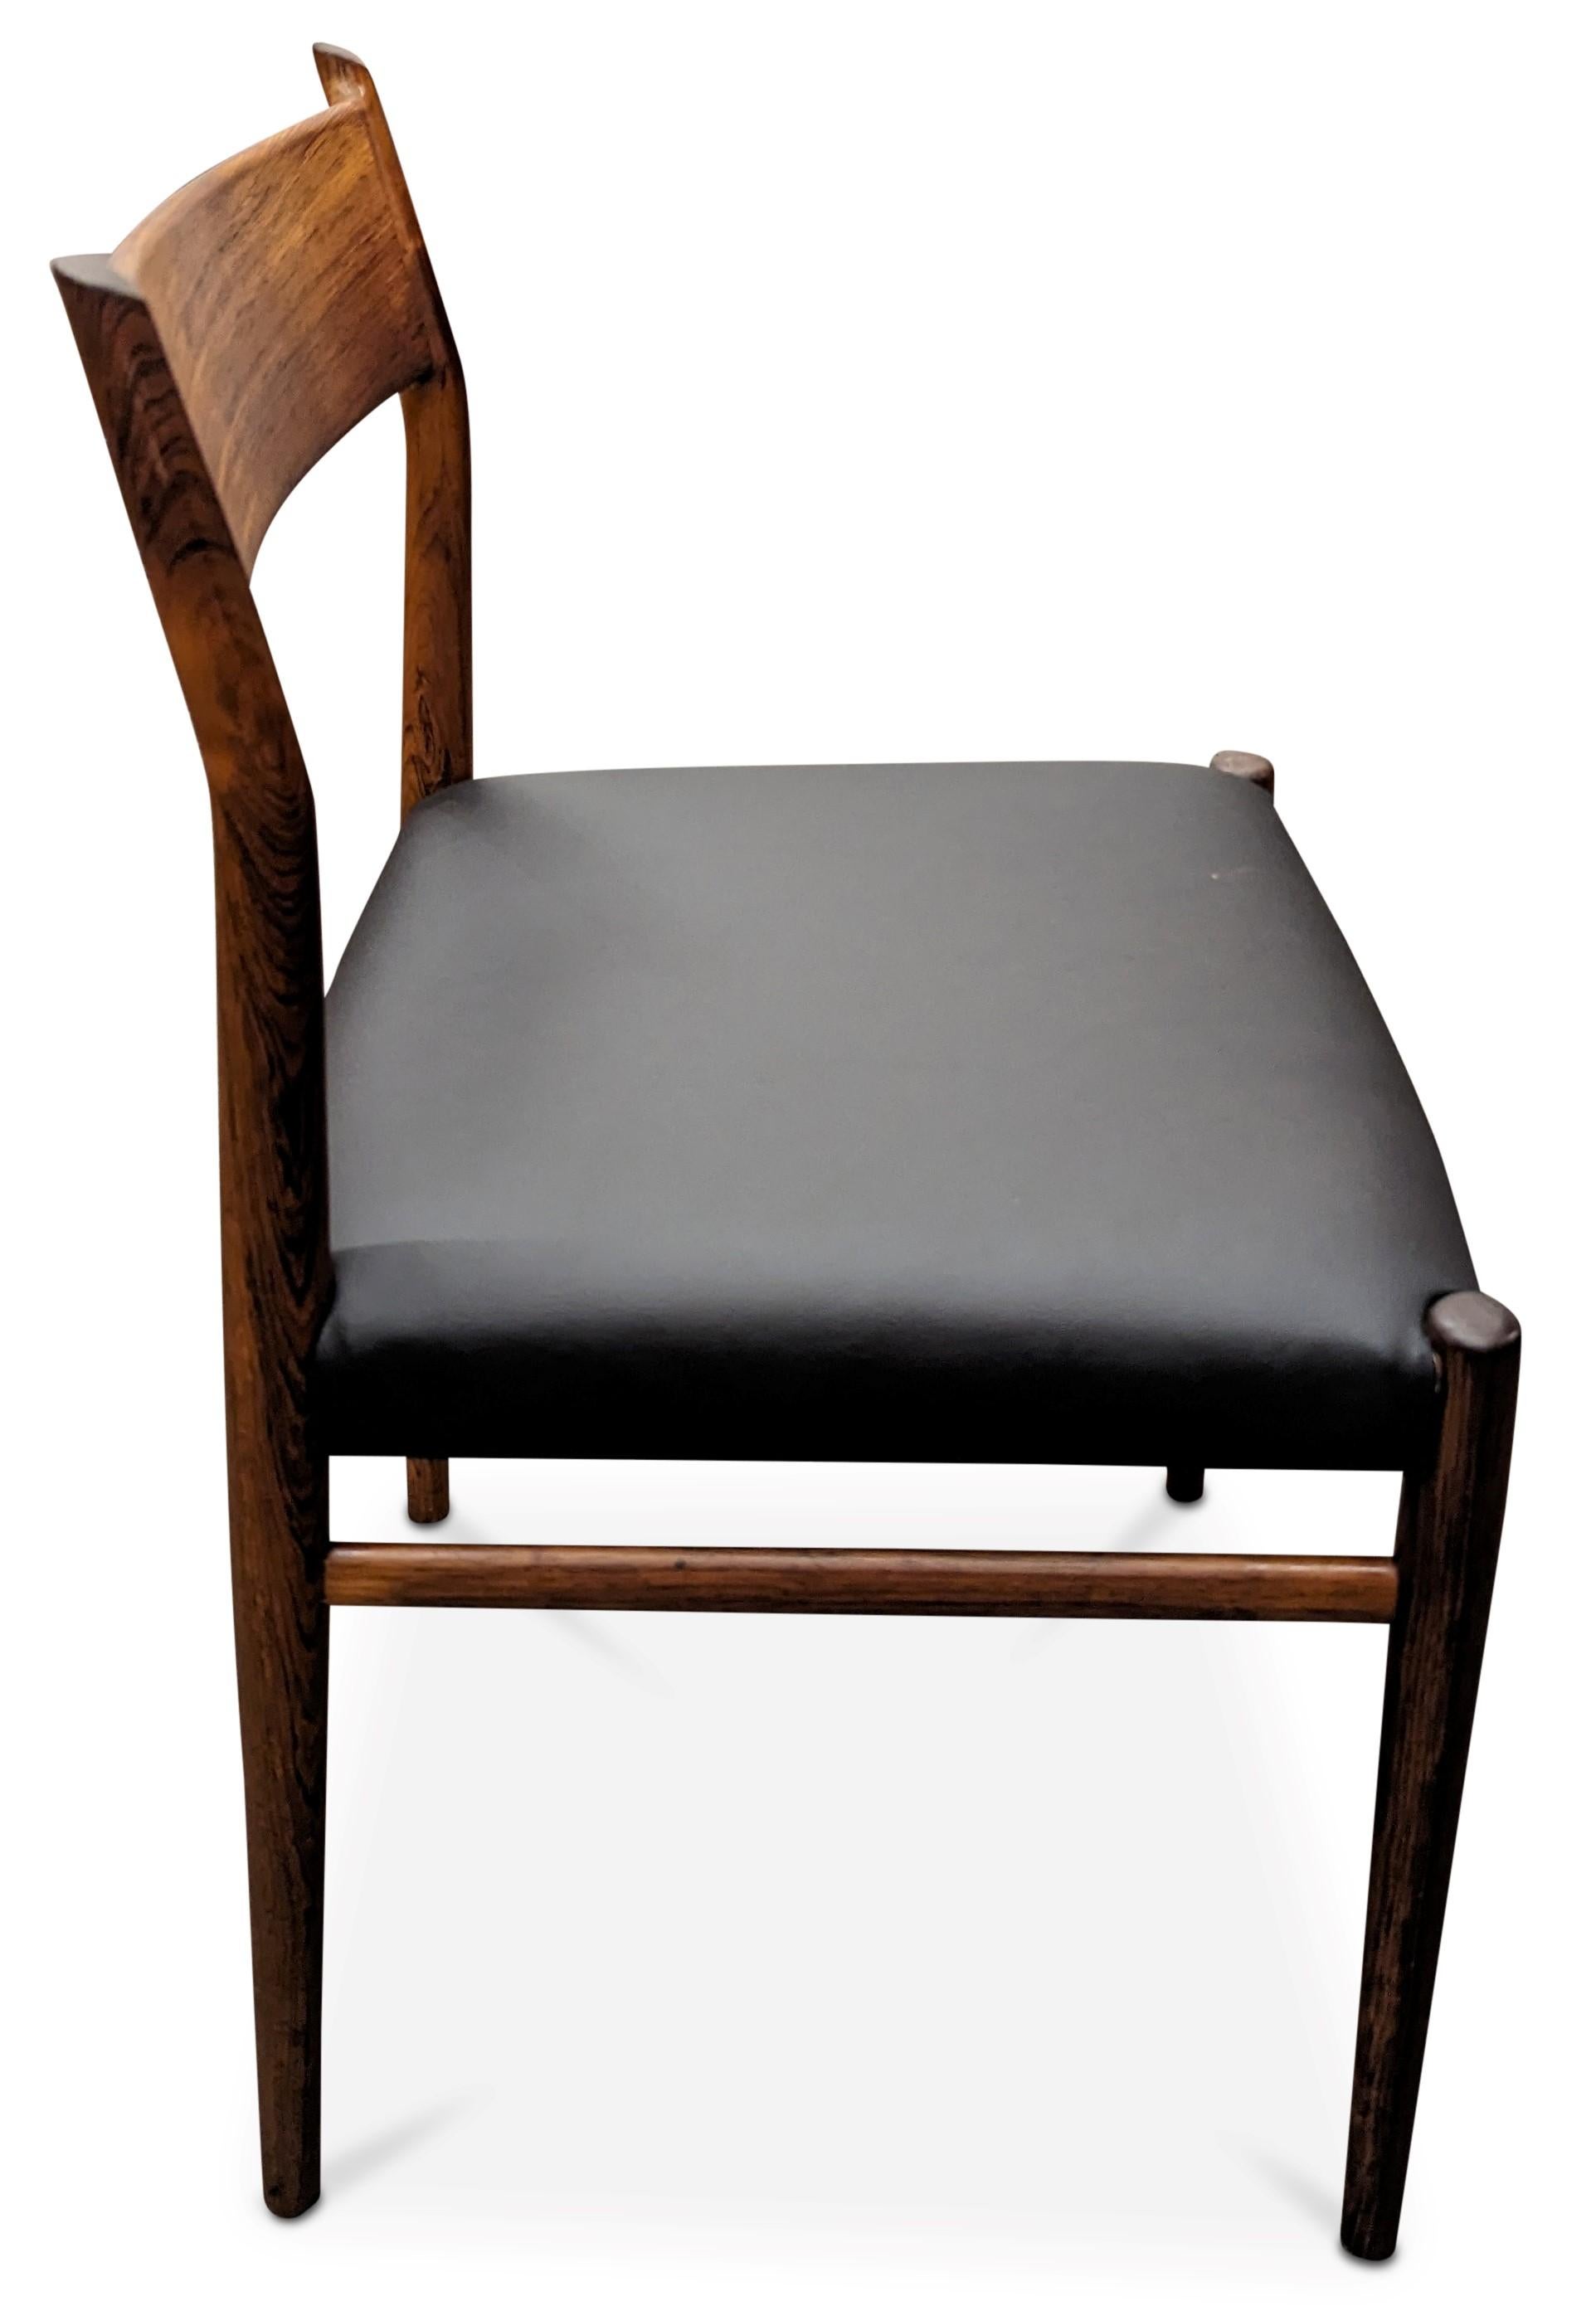 Mid-20th Century Vintage Danish Arne Vodder for Sibast Mobler Rosewood Dining Chair - 082316